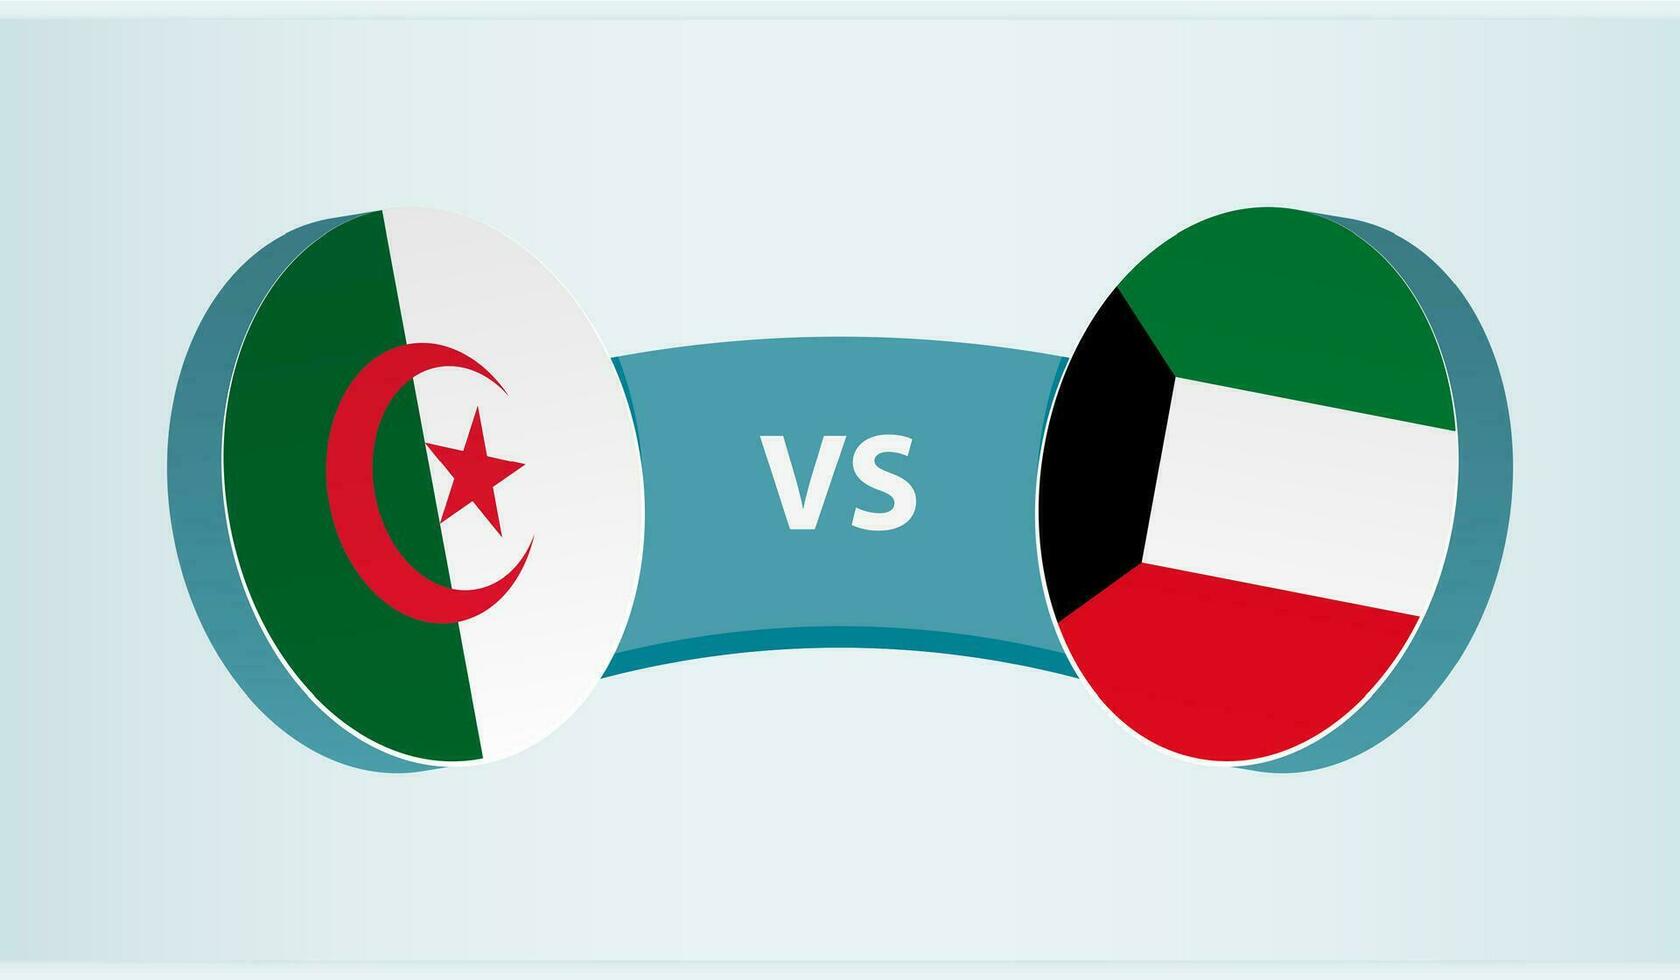 Algeria versus Kuwait, team sports competition concept. vector